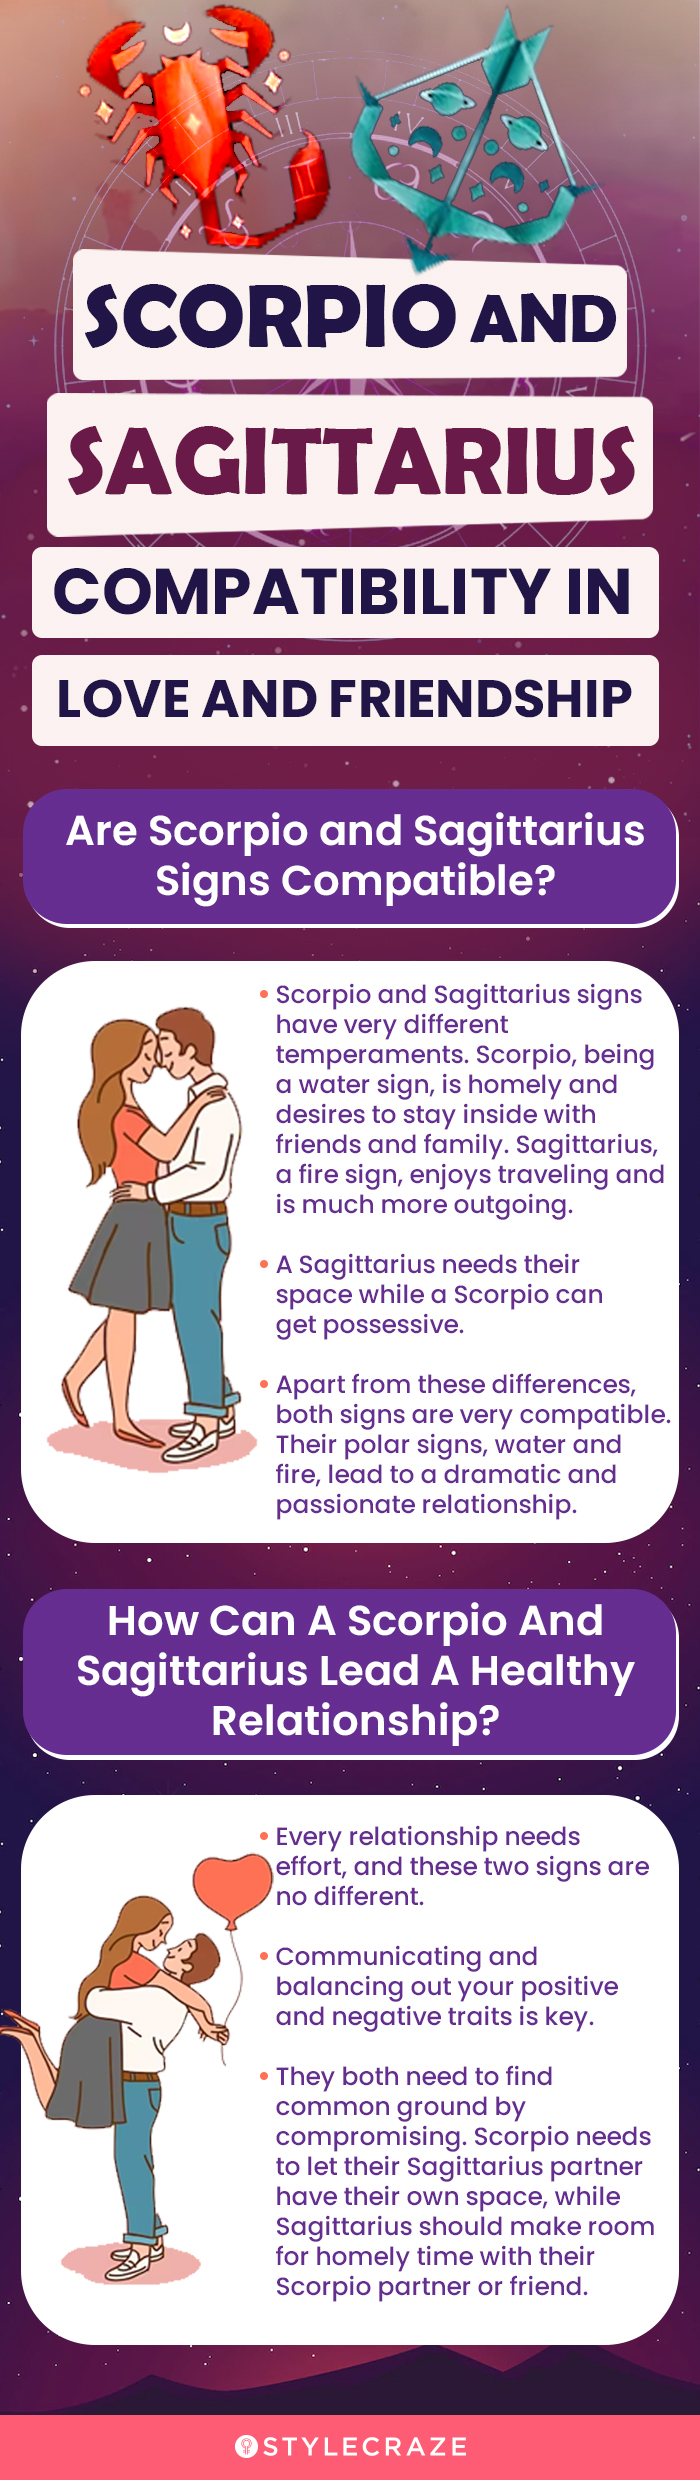 scorpio and sagittarius compatibility in love and friendship (infographic)